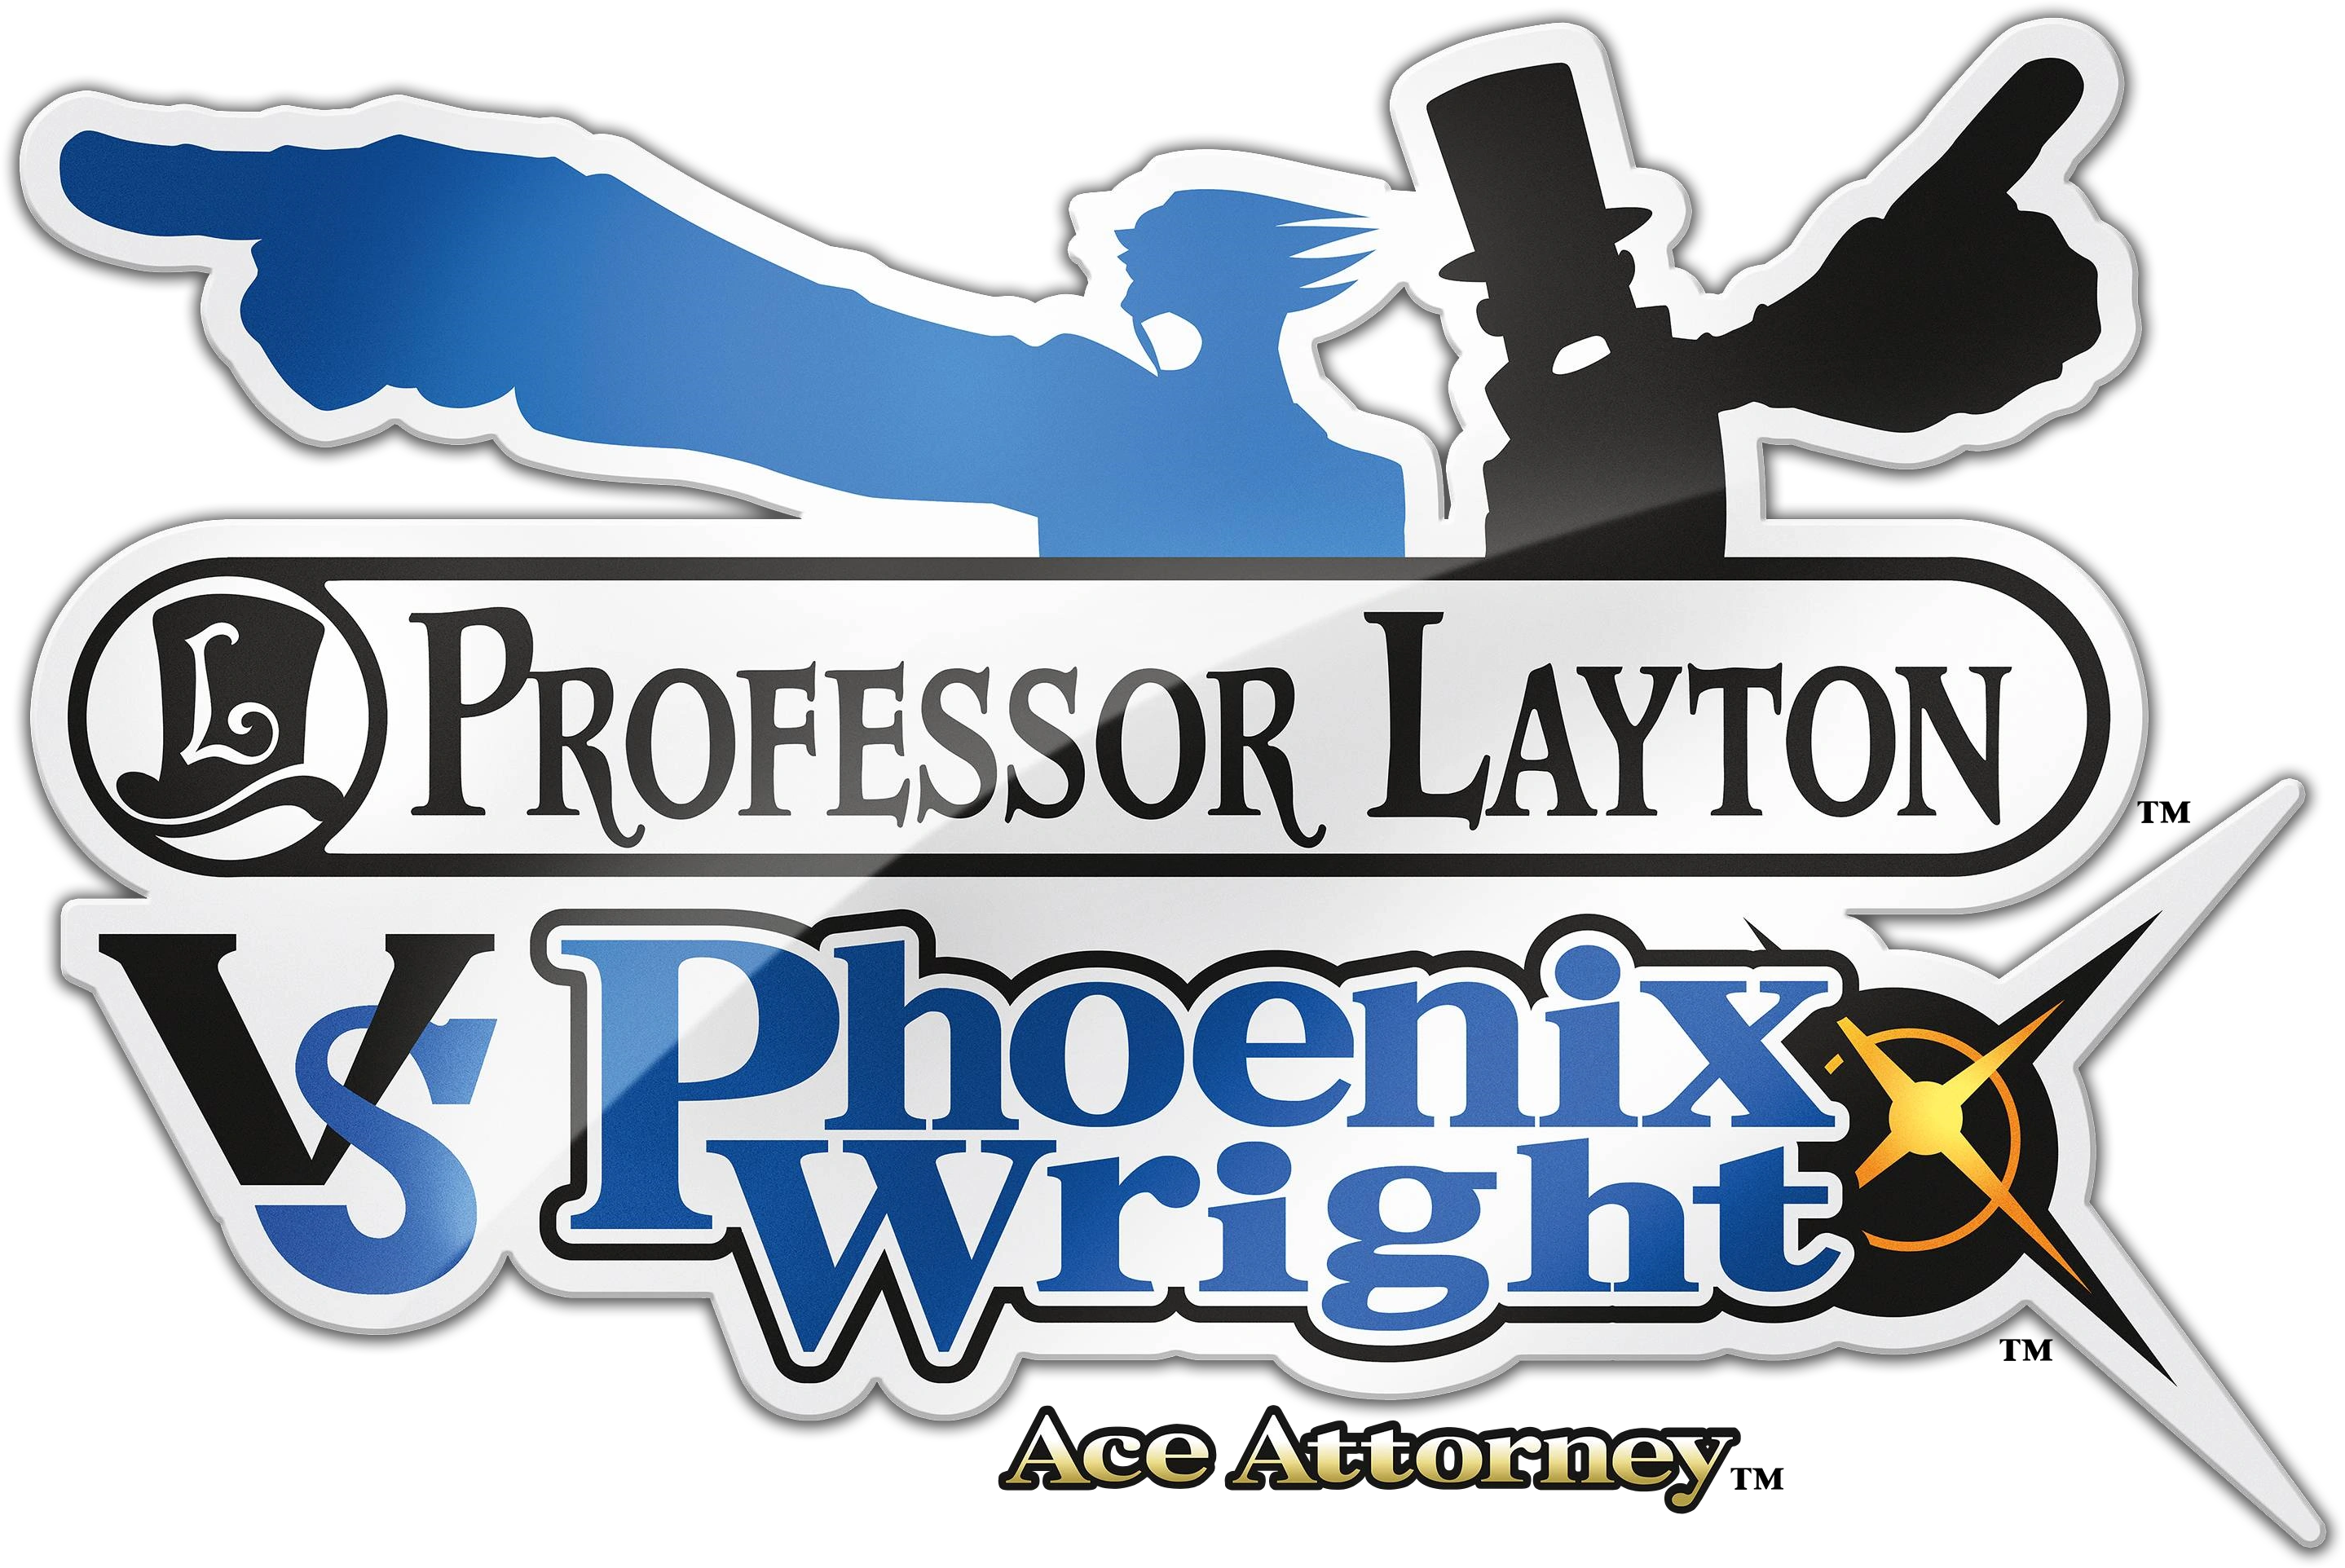 Professor Layton vs Phoenix Wright: Ace Attorney review